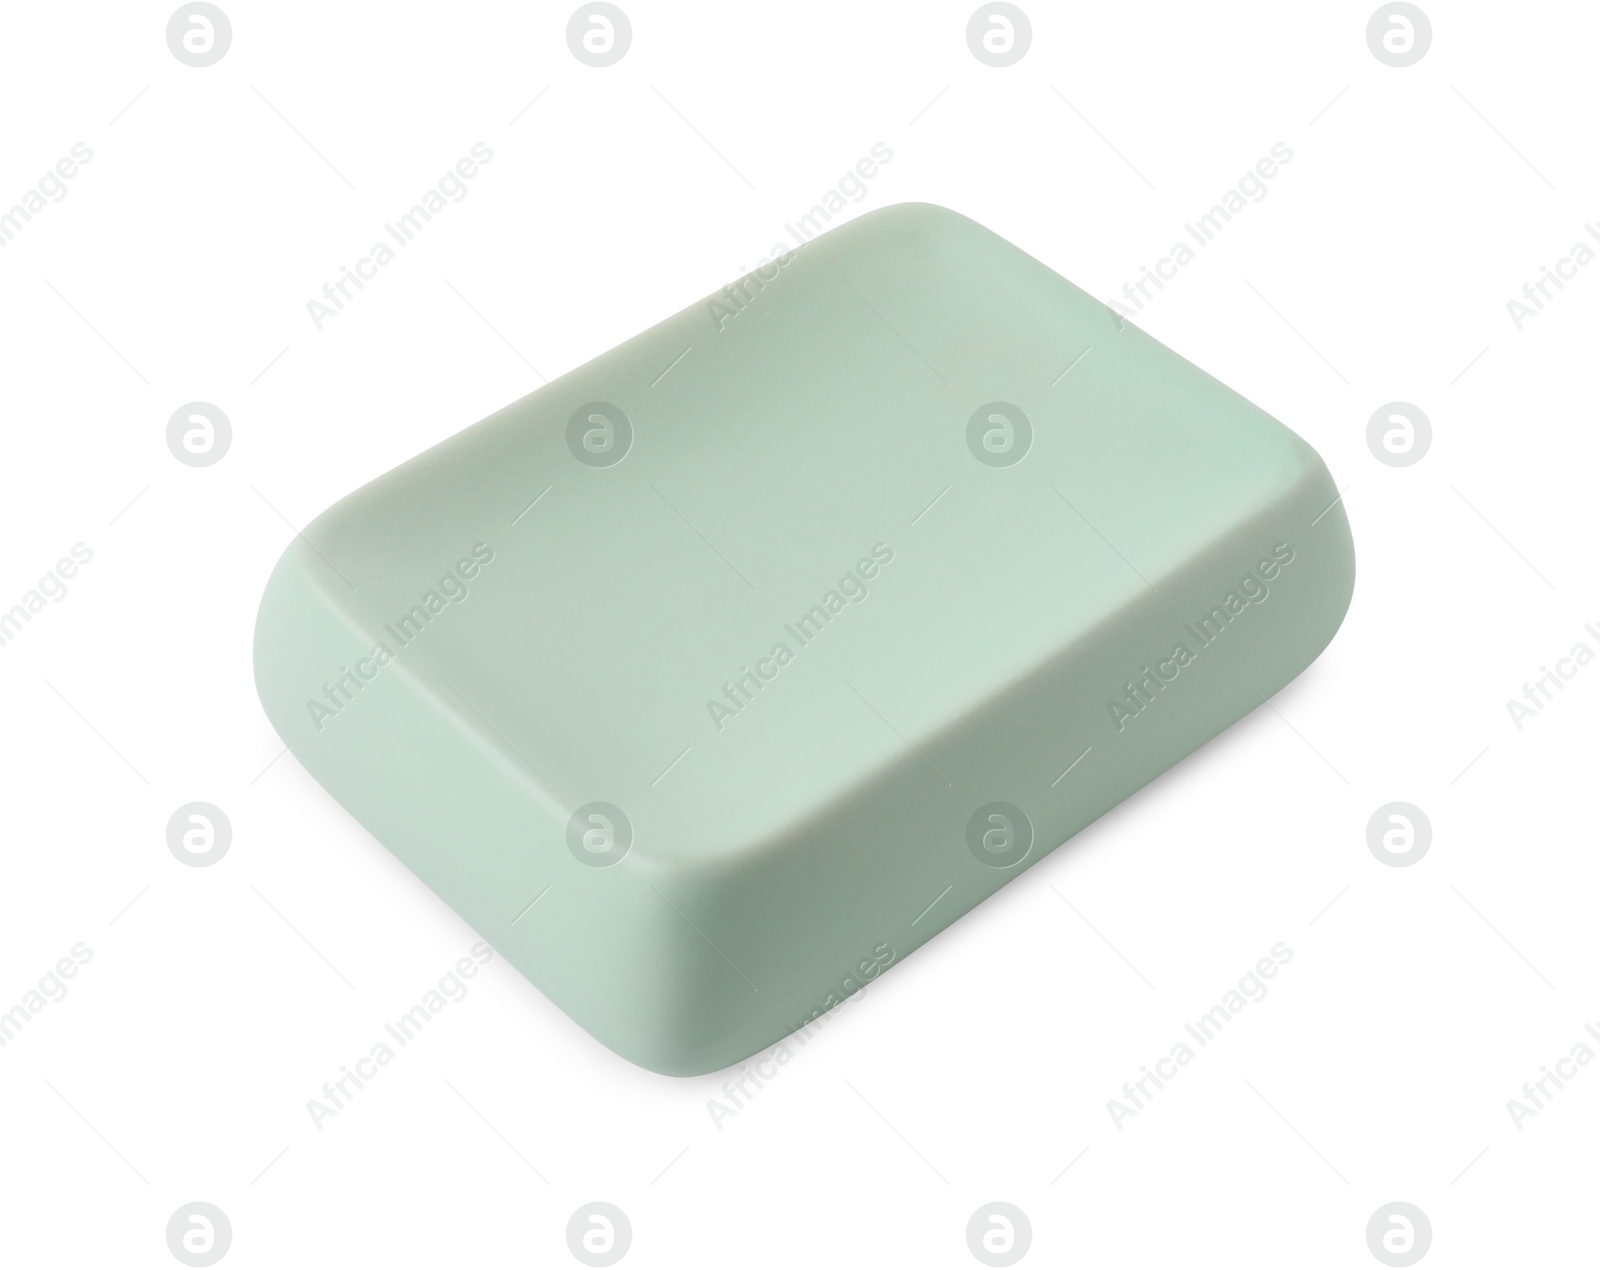 Photo of Bath accessory. Light green ceramic soap dish isolated on white